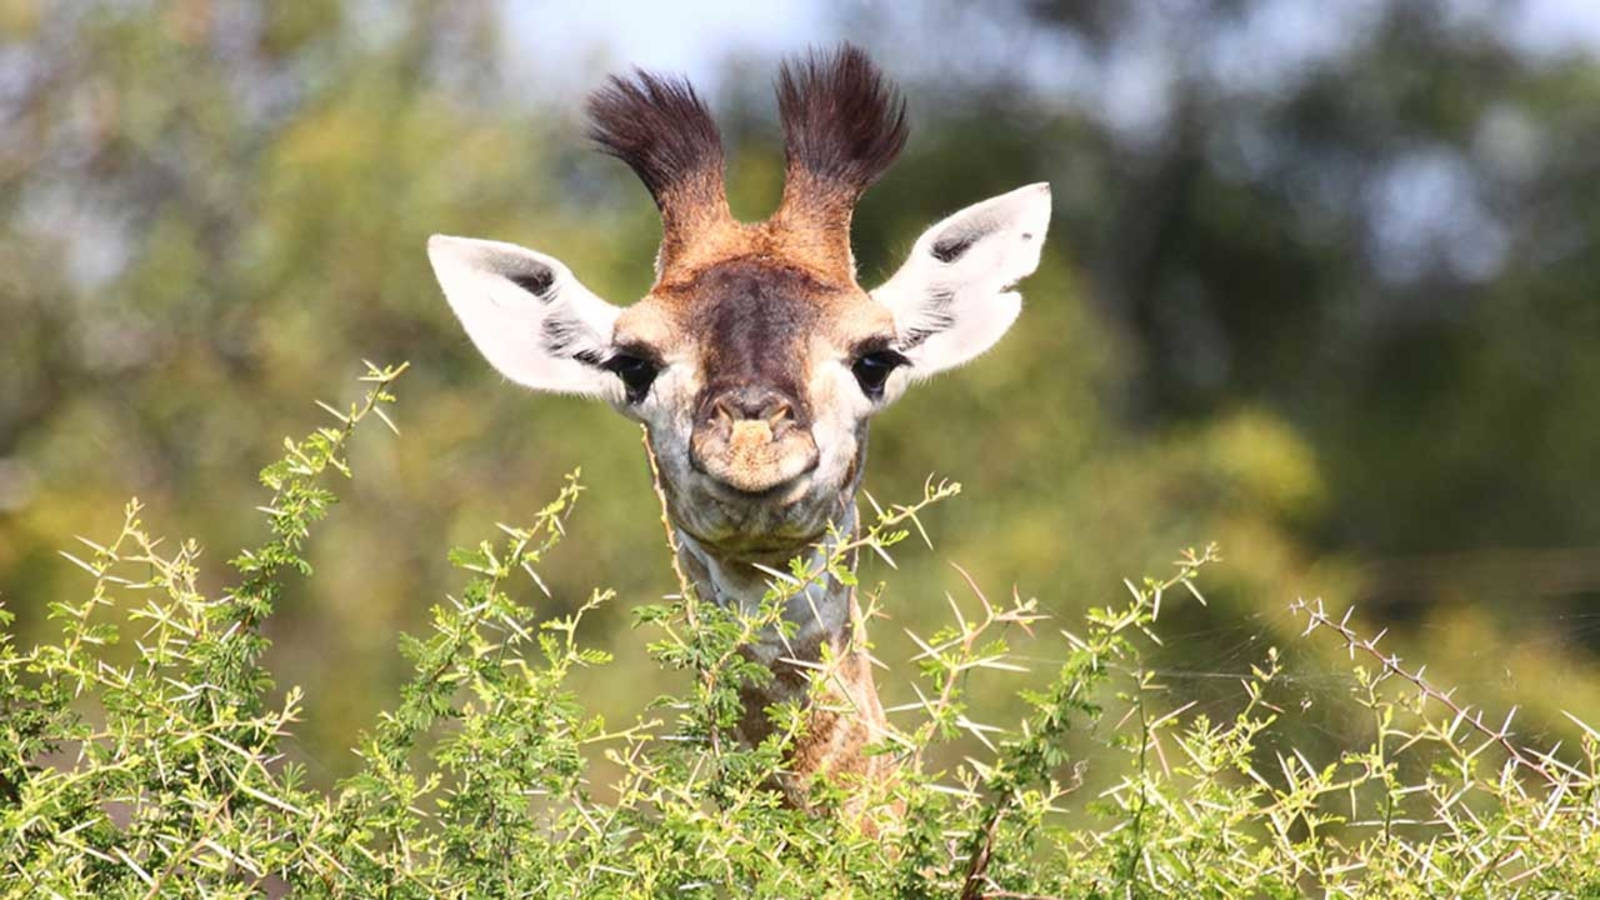 Innocent Delight - A Baby Giraffe With Bushy Horns